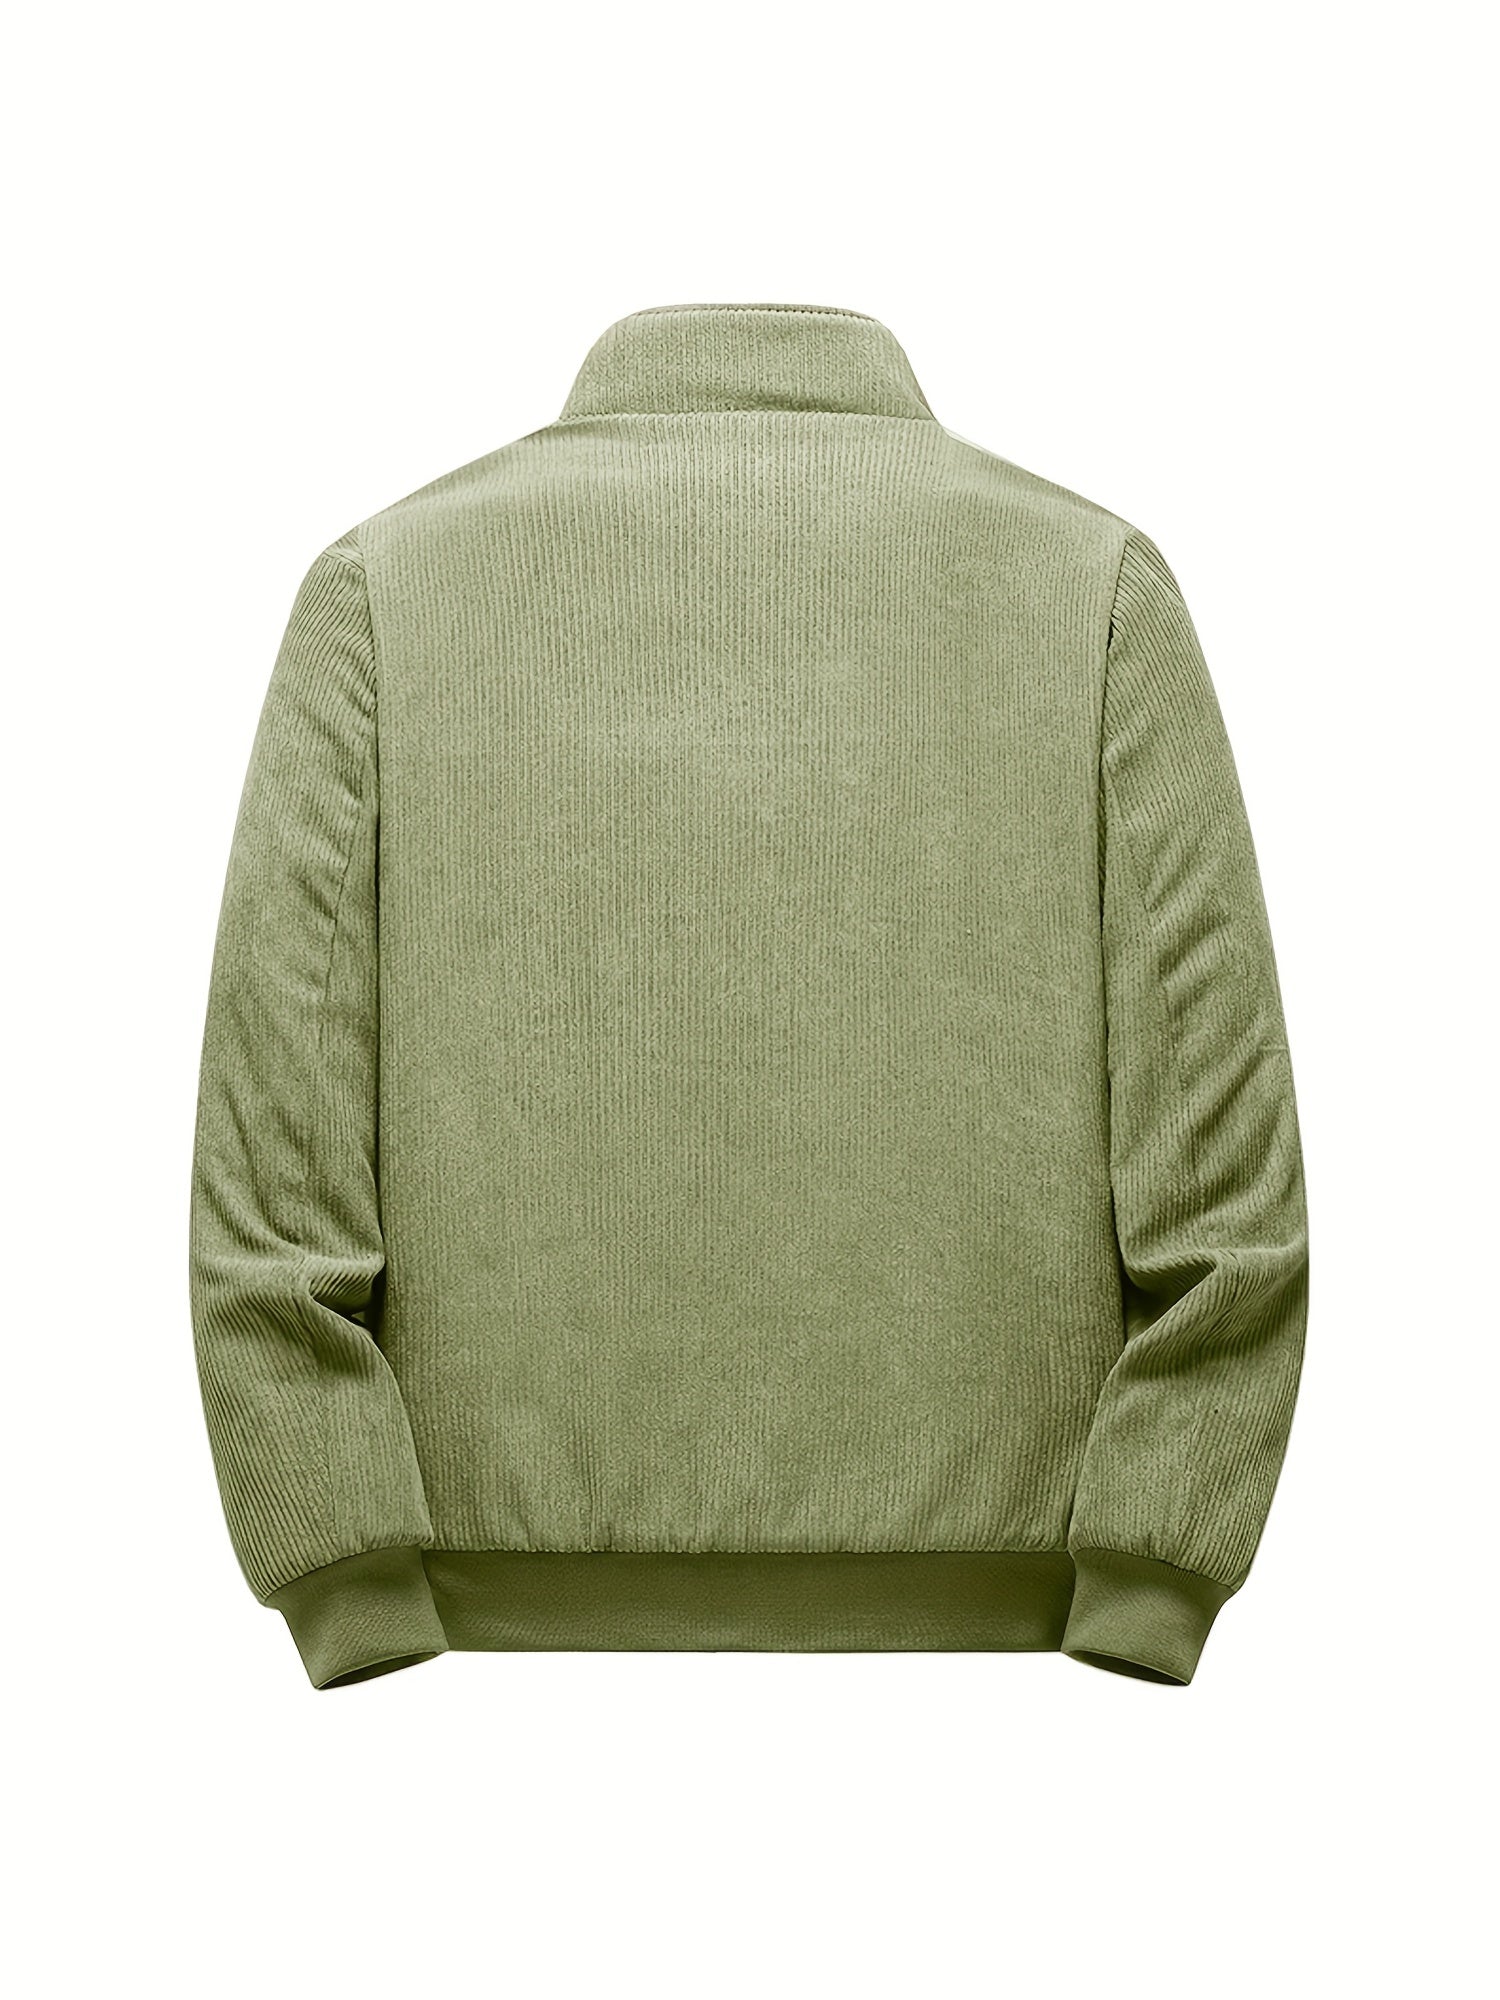 Men's Polar Fleece Jacket - Green